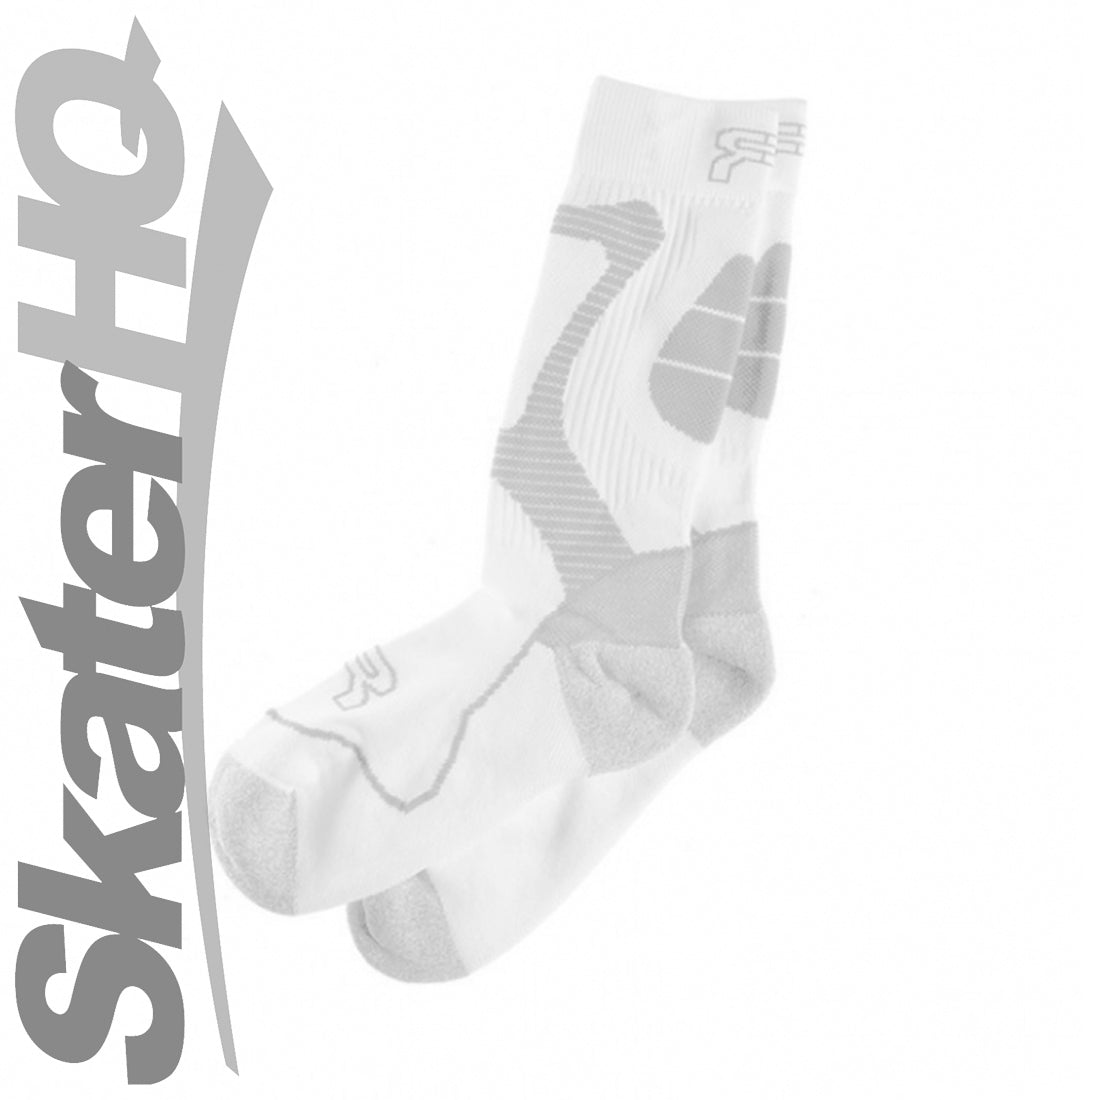 FR Nano Sport Socks White - Large - EU42-44 Apparel Socks